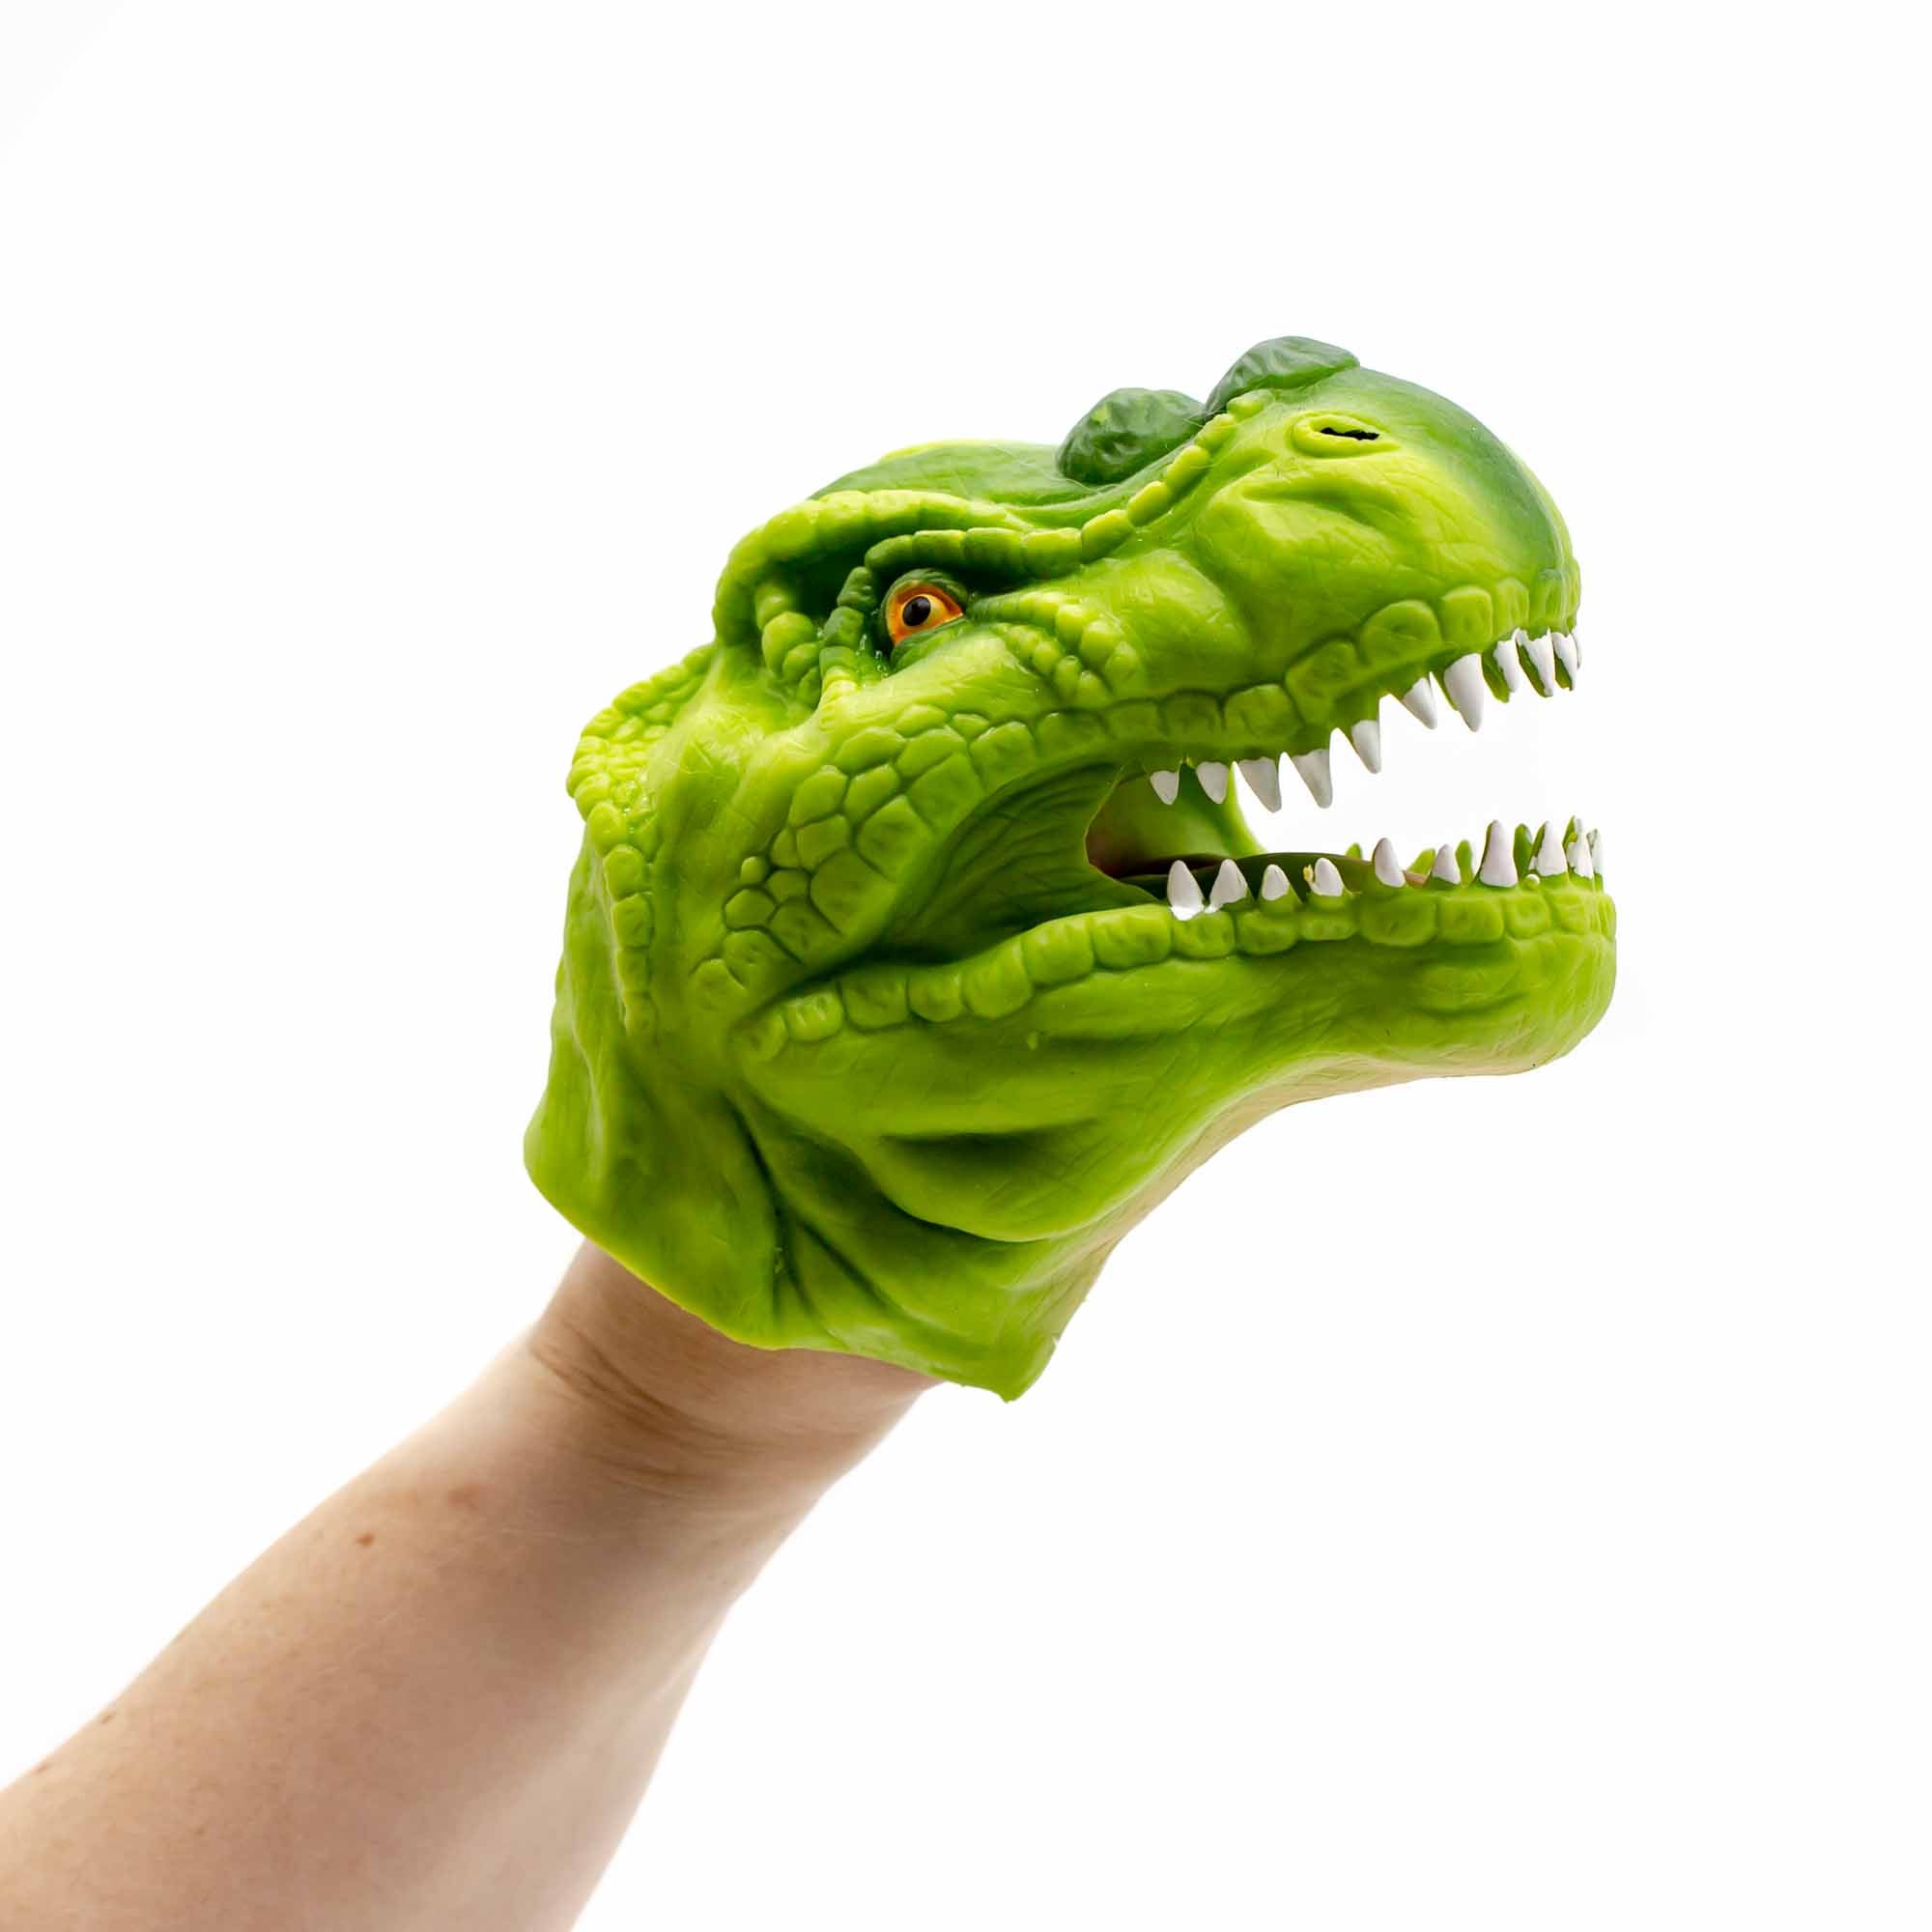 Fierce Dinosaur Hand Puppet - Mortise And Tenon